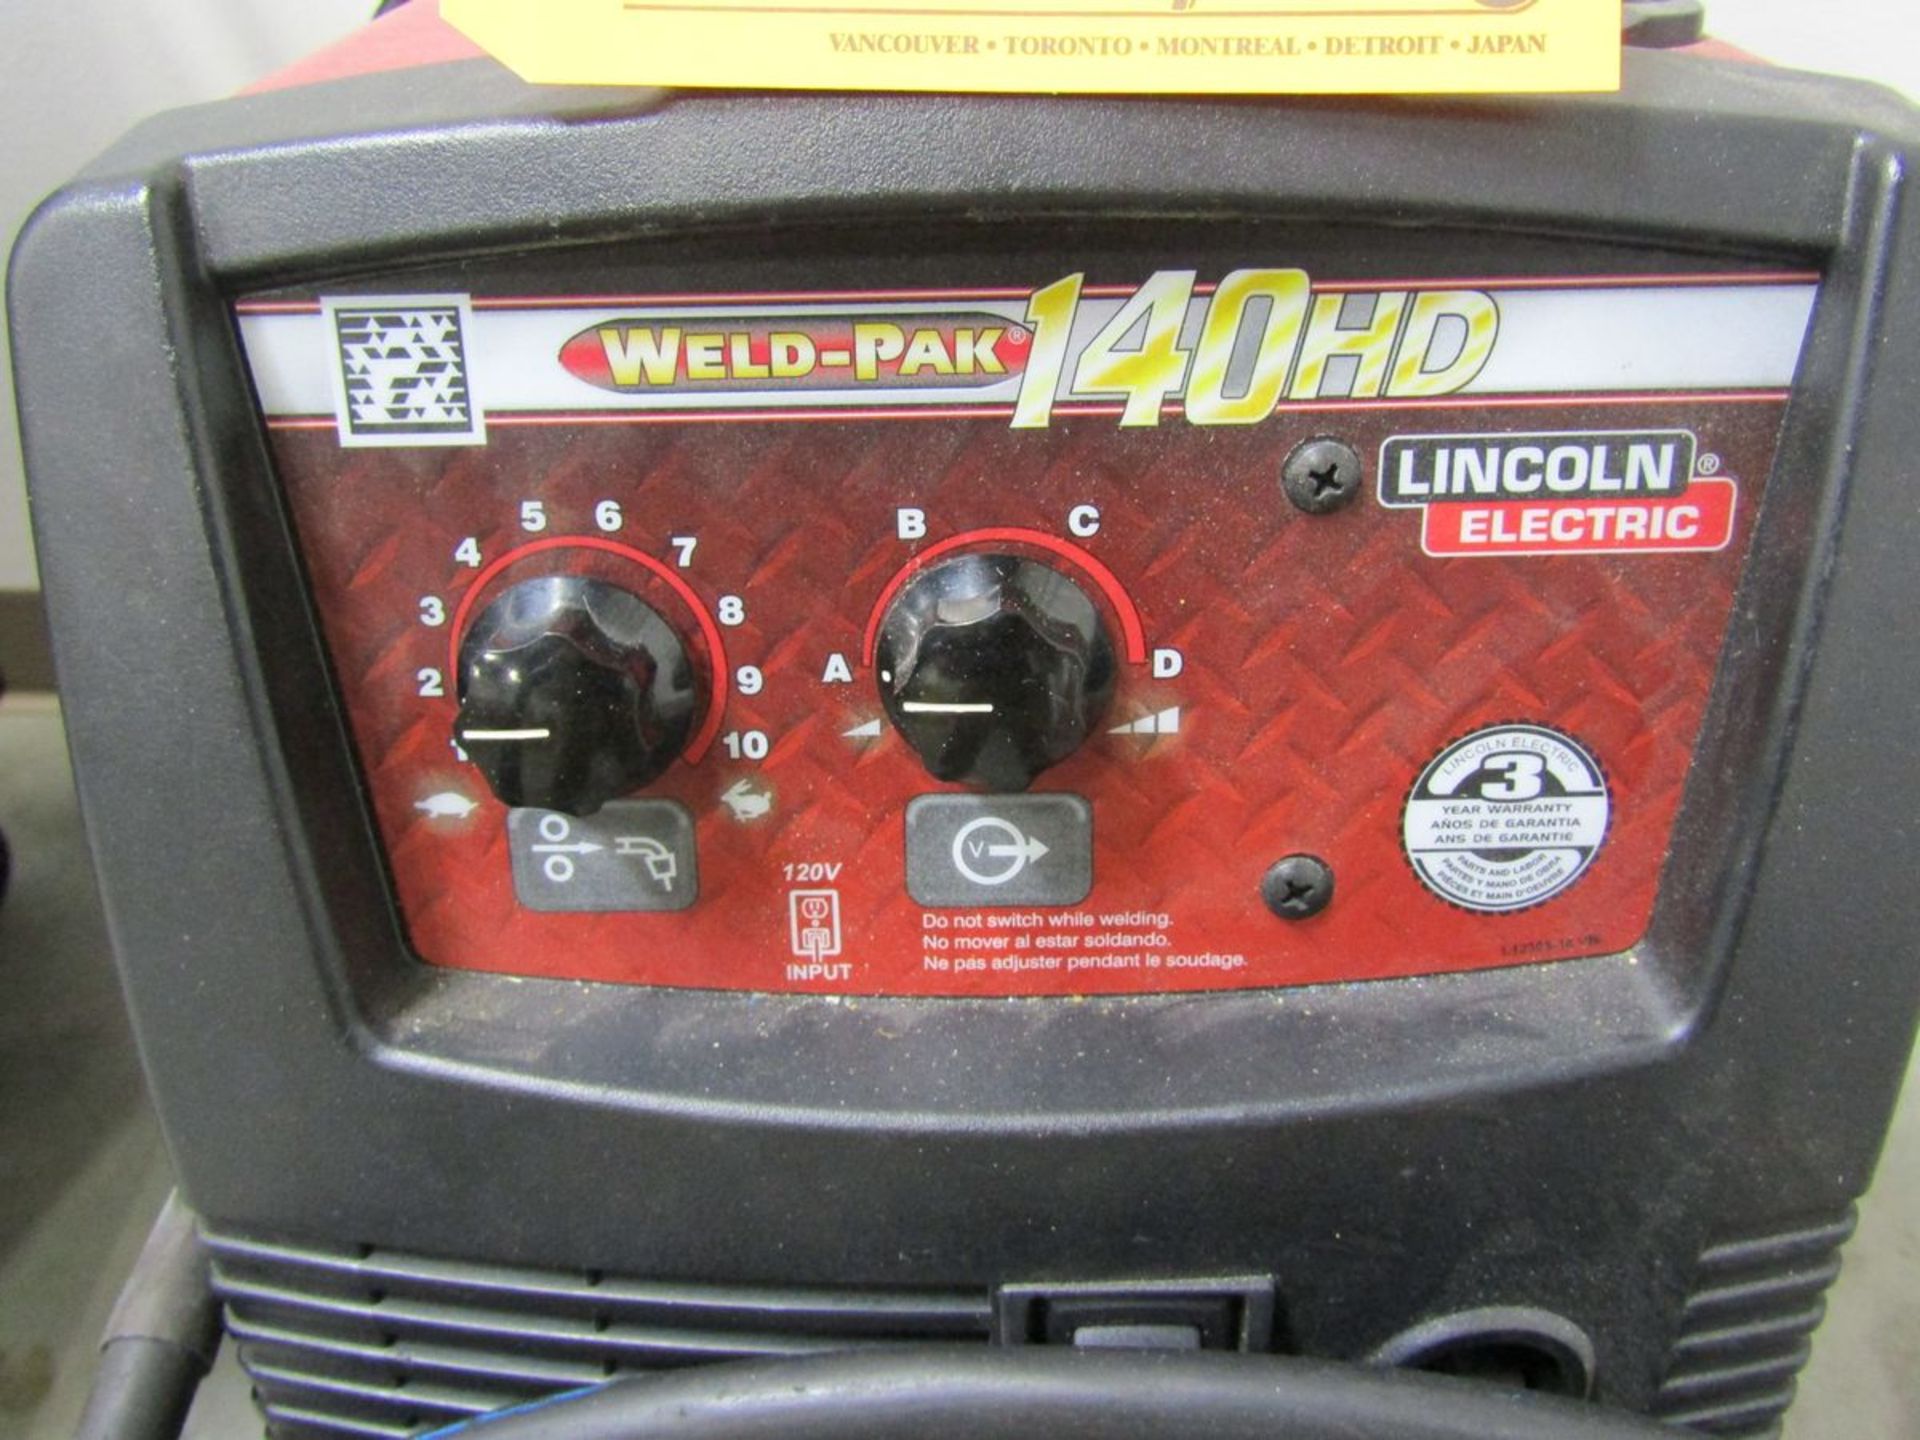 Lincoln Electric Weld-Pak 140 HD Mig Welder - Image 2 of 4